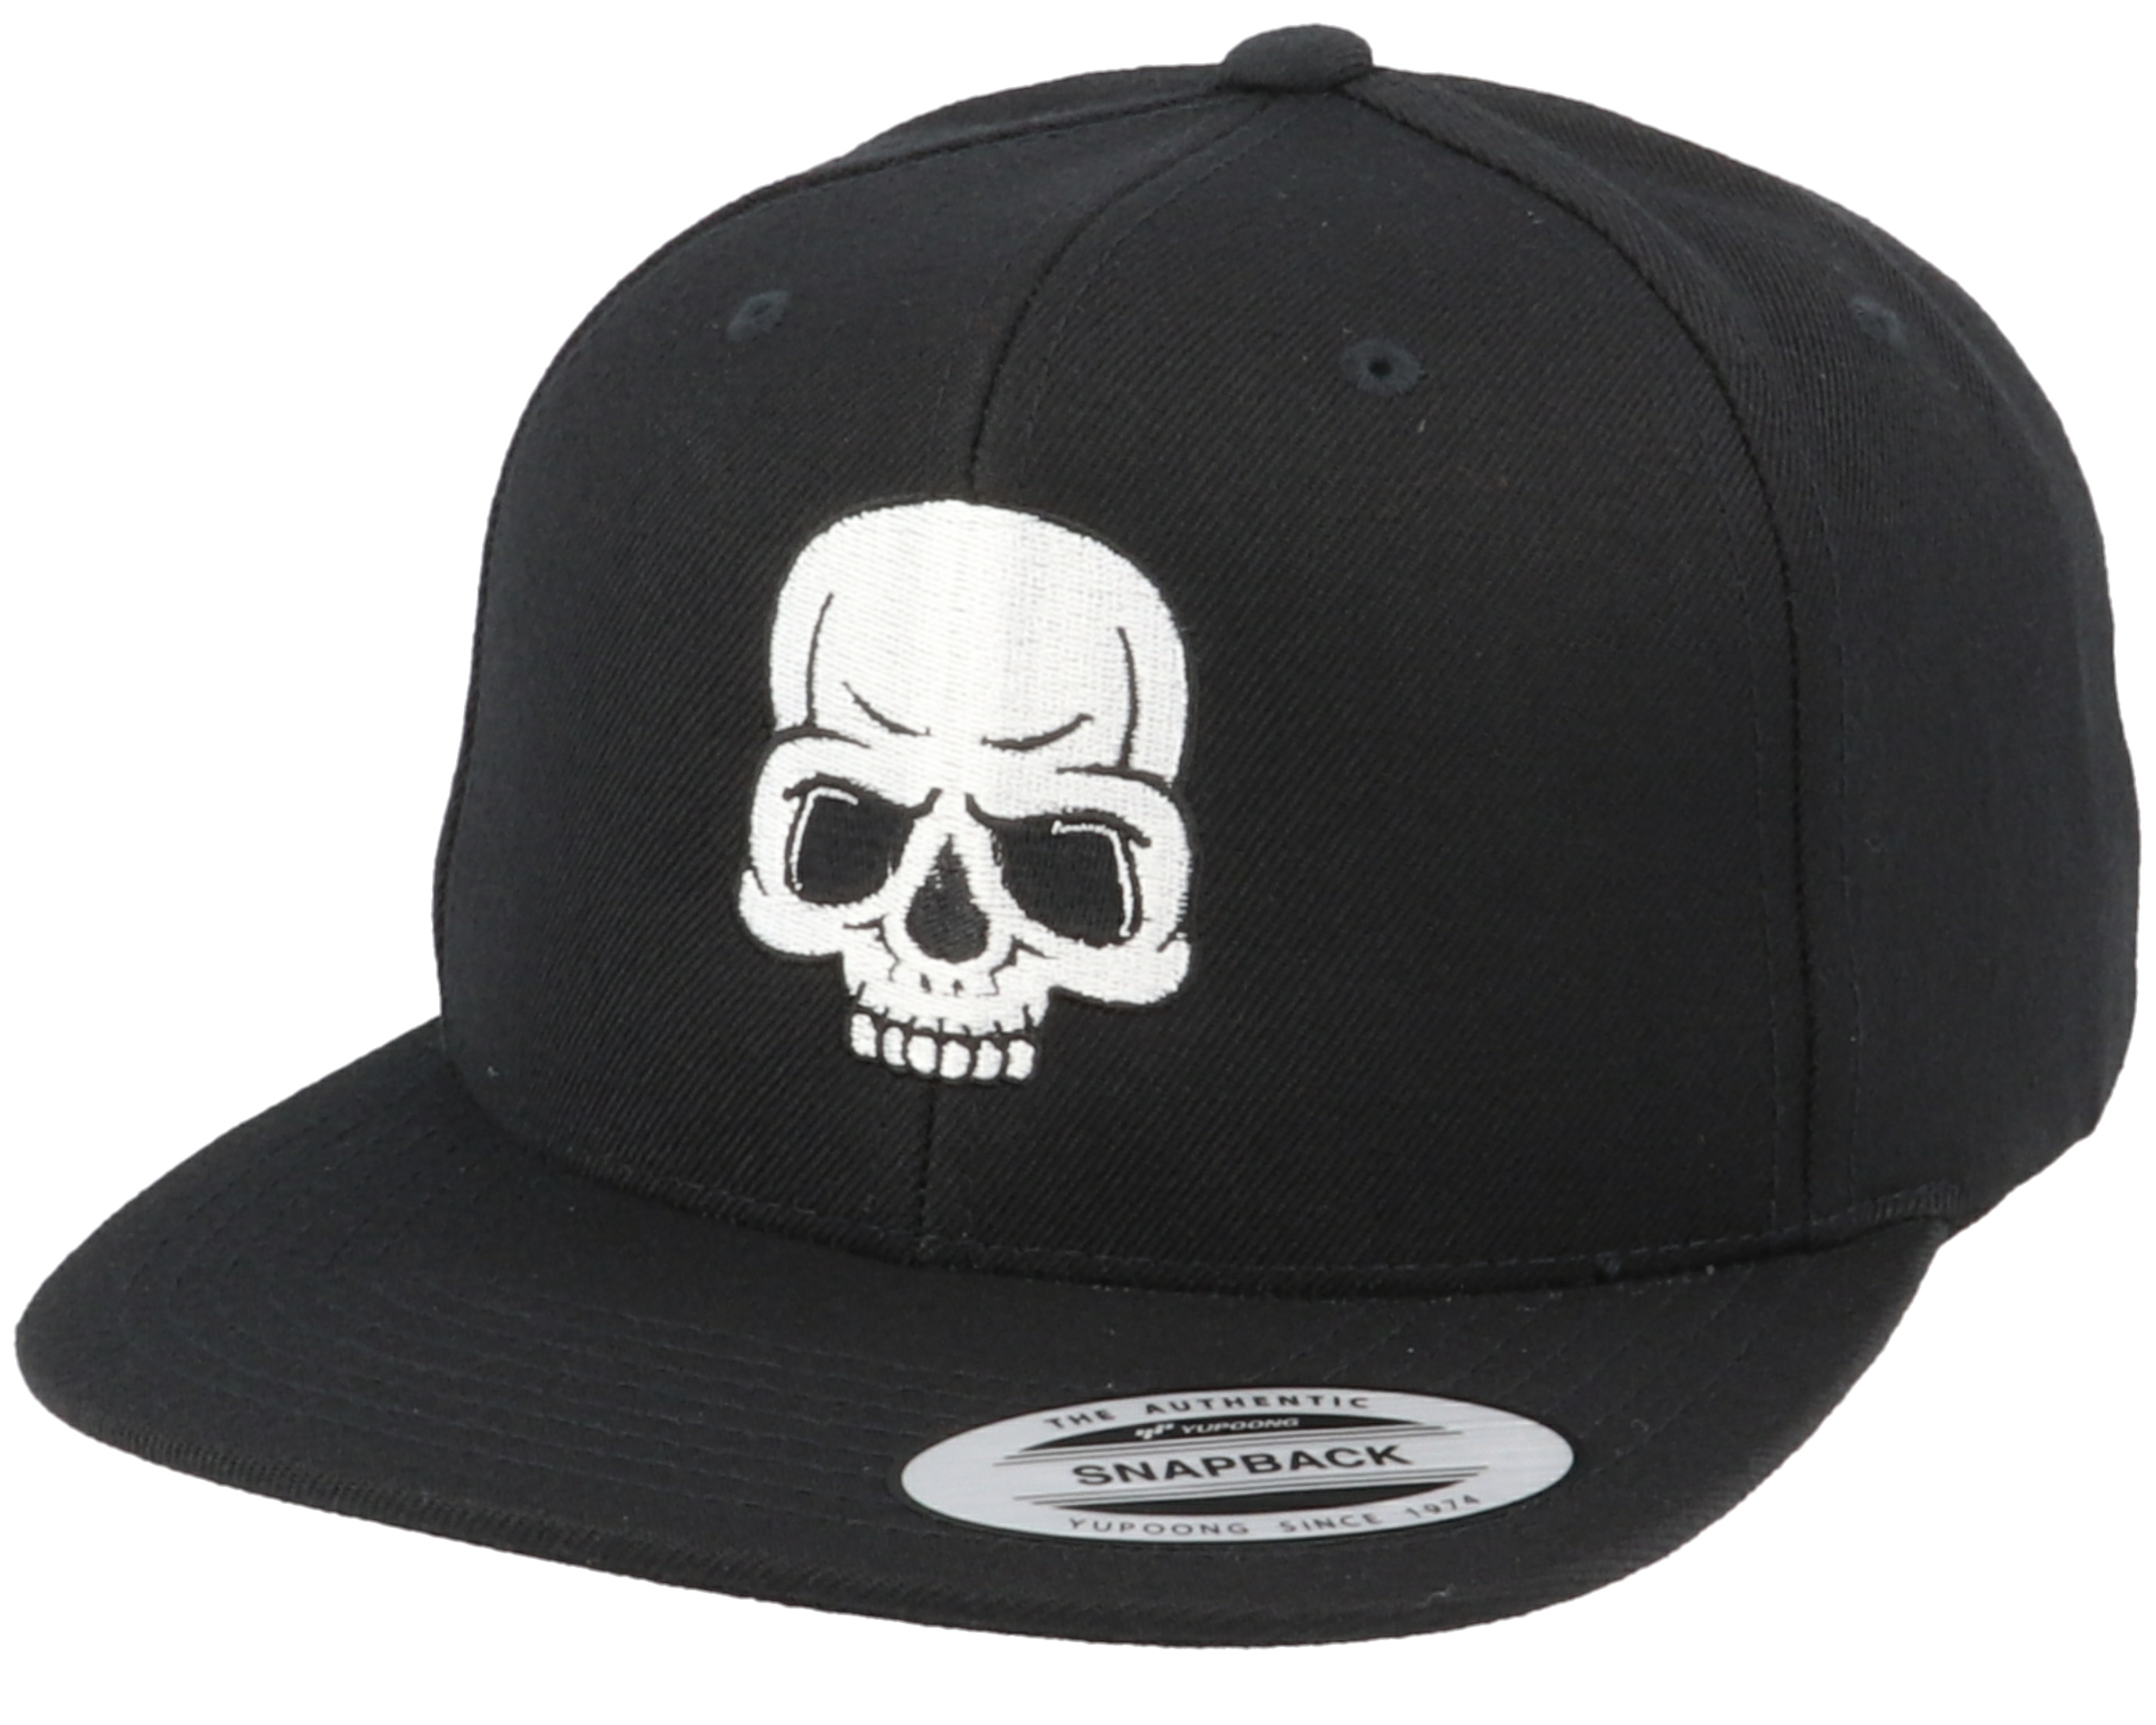 Bad Skull Black Snapback - Iconic caps - Hatstoreworld.com